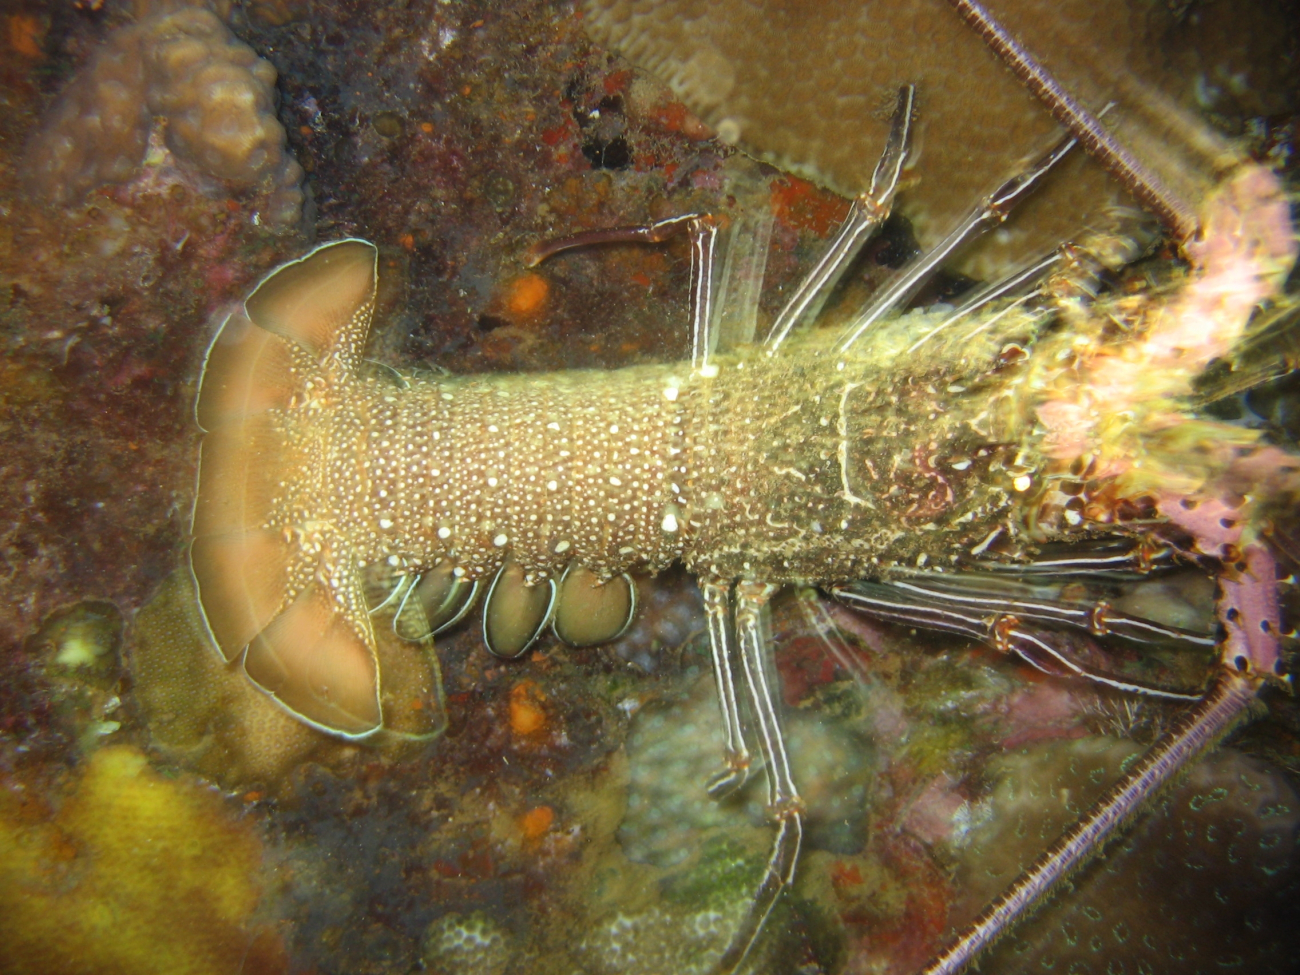 Spiny lobster (Panulirus penicillatus)